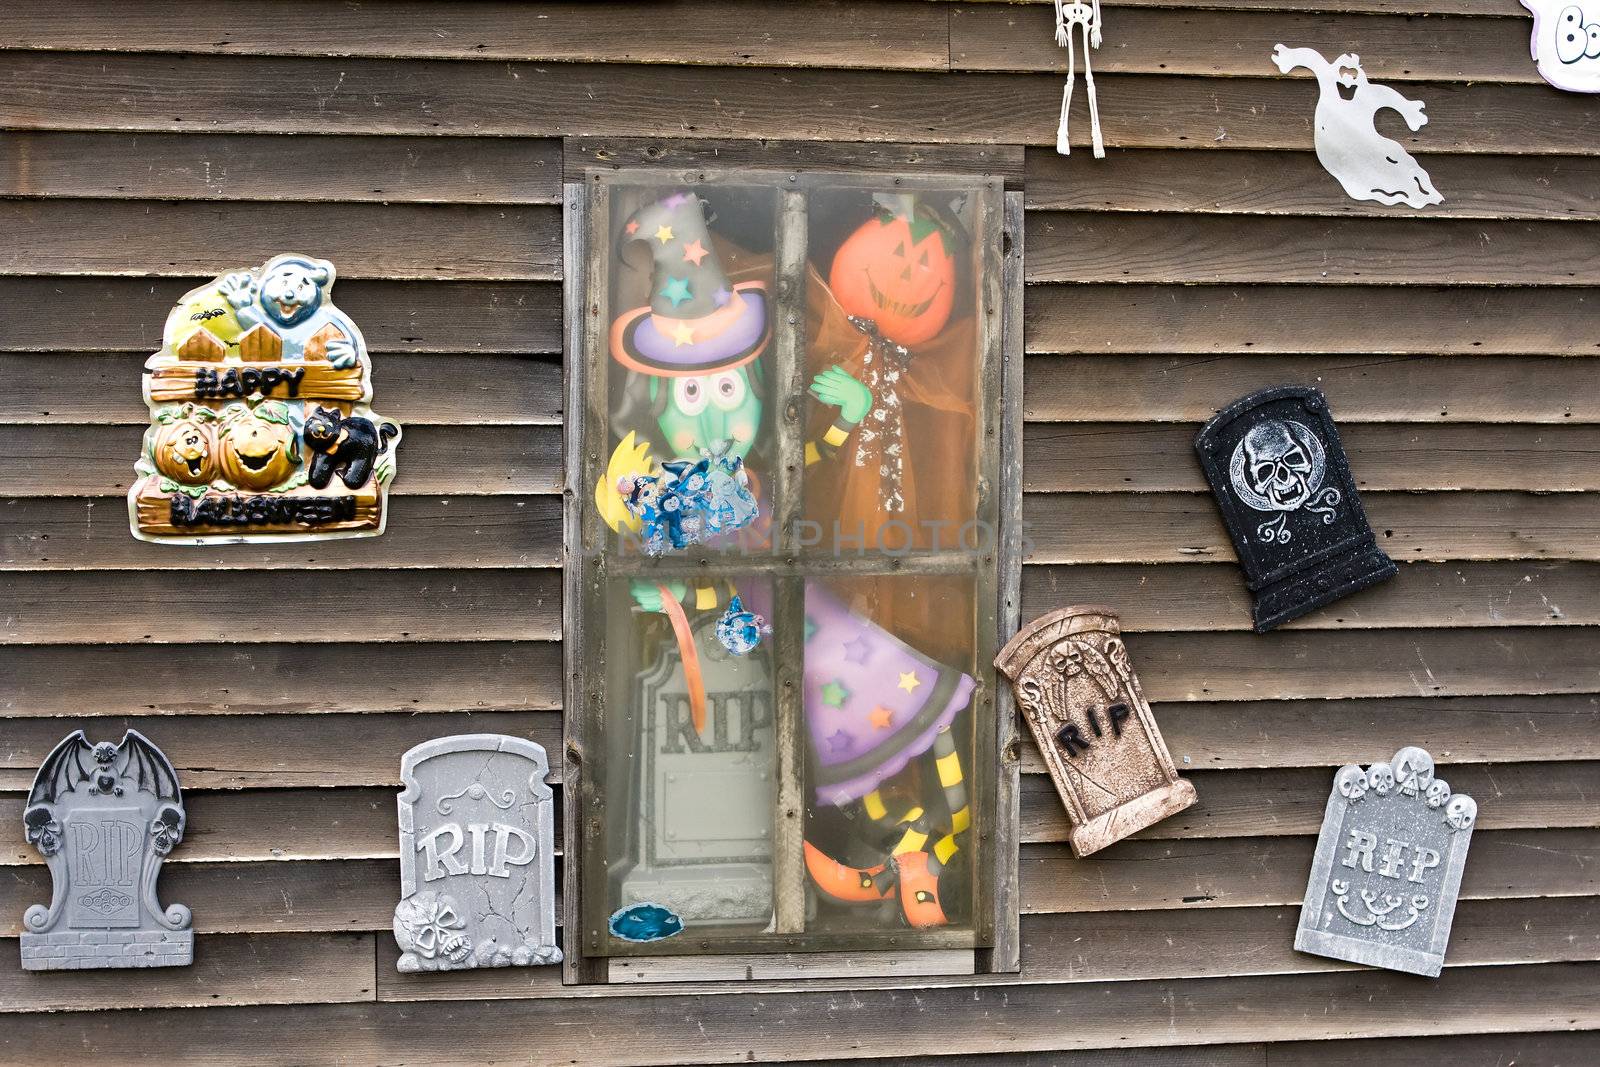 Haunted house window by Coffee999